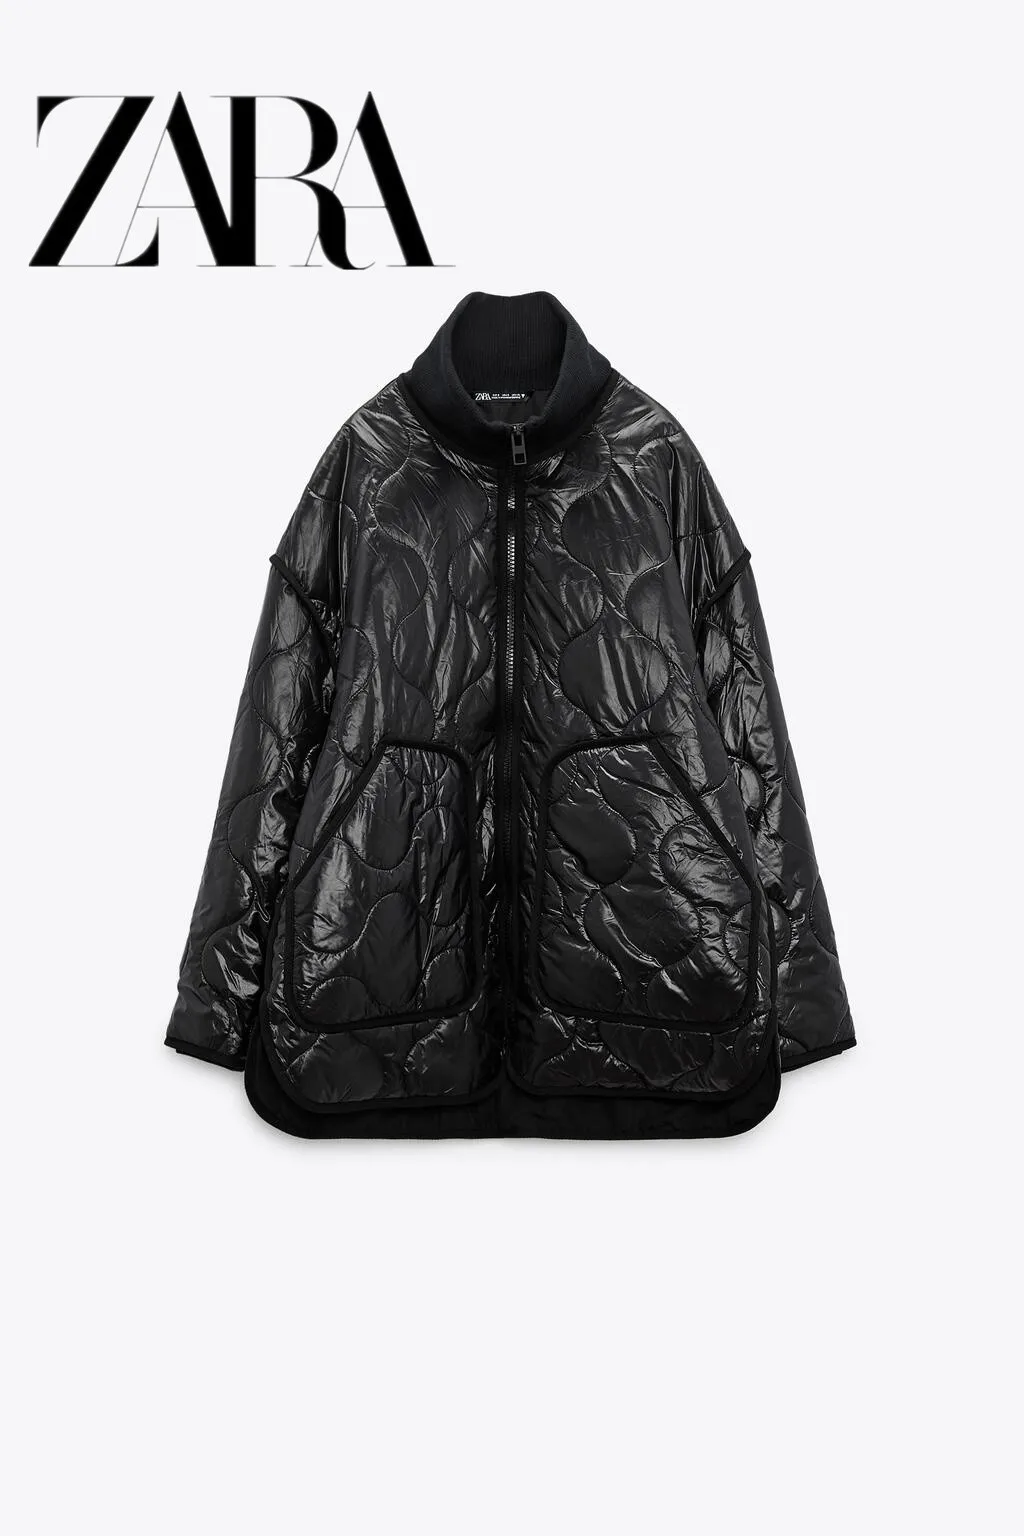 

ZARA KISS Autumn and Winter New TRF Women's Black Cotton Jacket Jacket 4432726 800